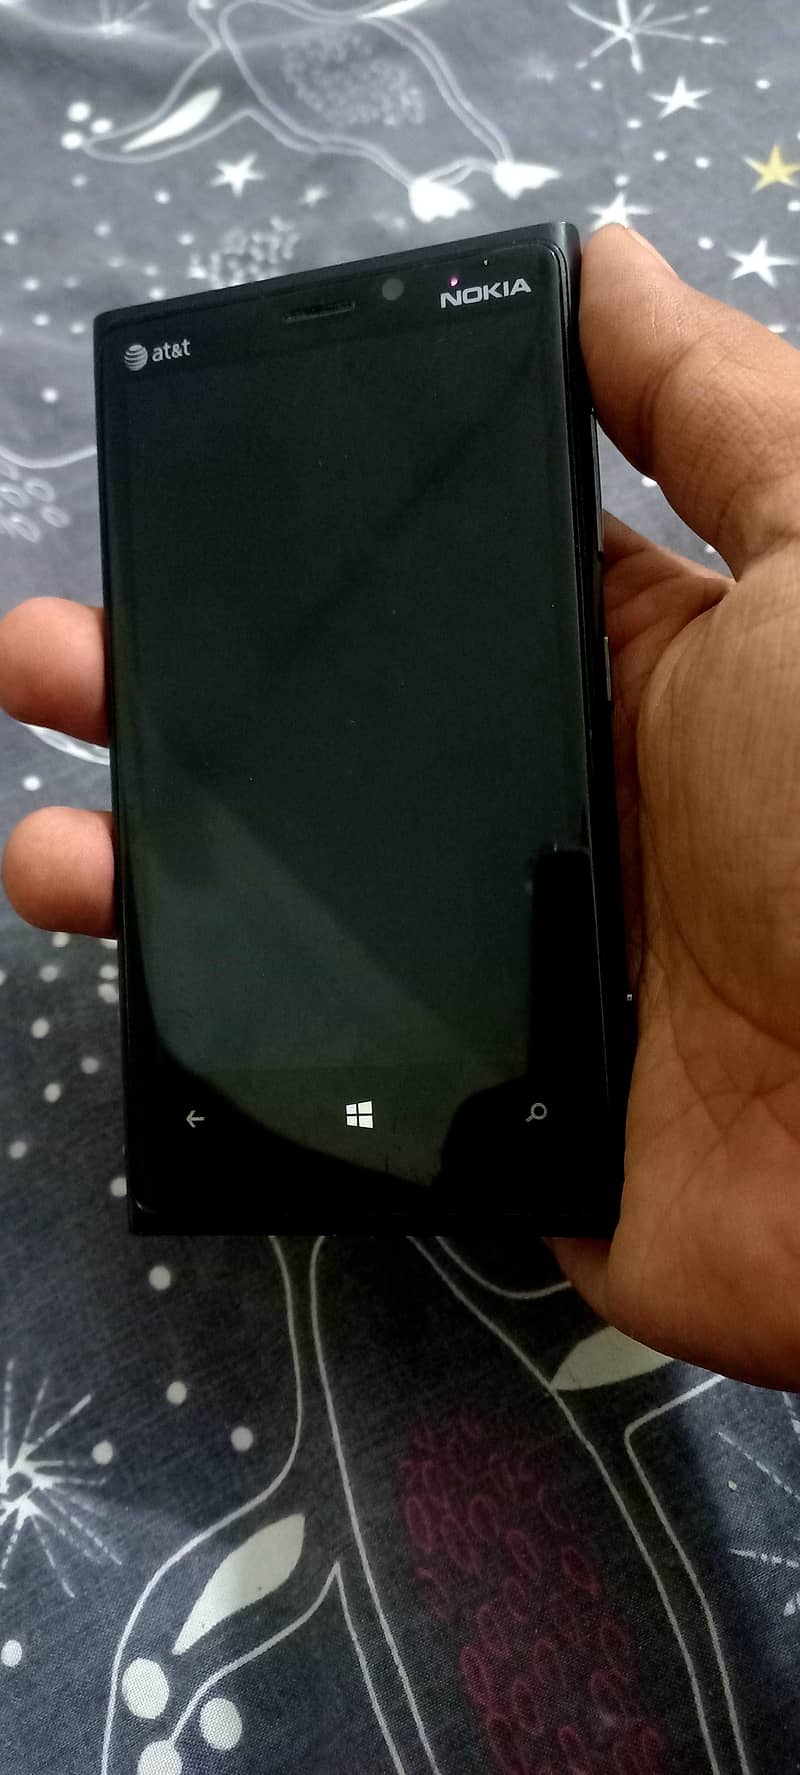 Nokia Lumia 920 (Like New) 2